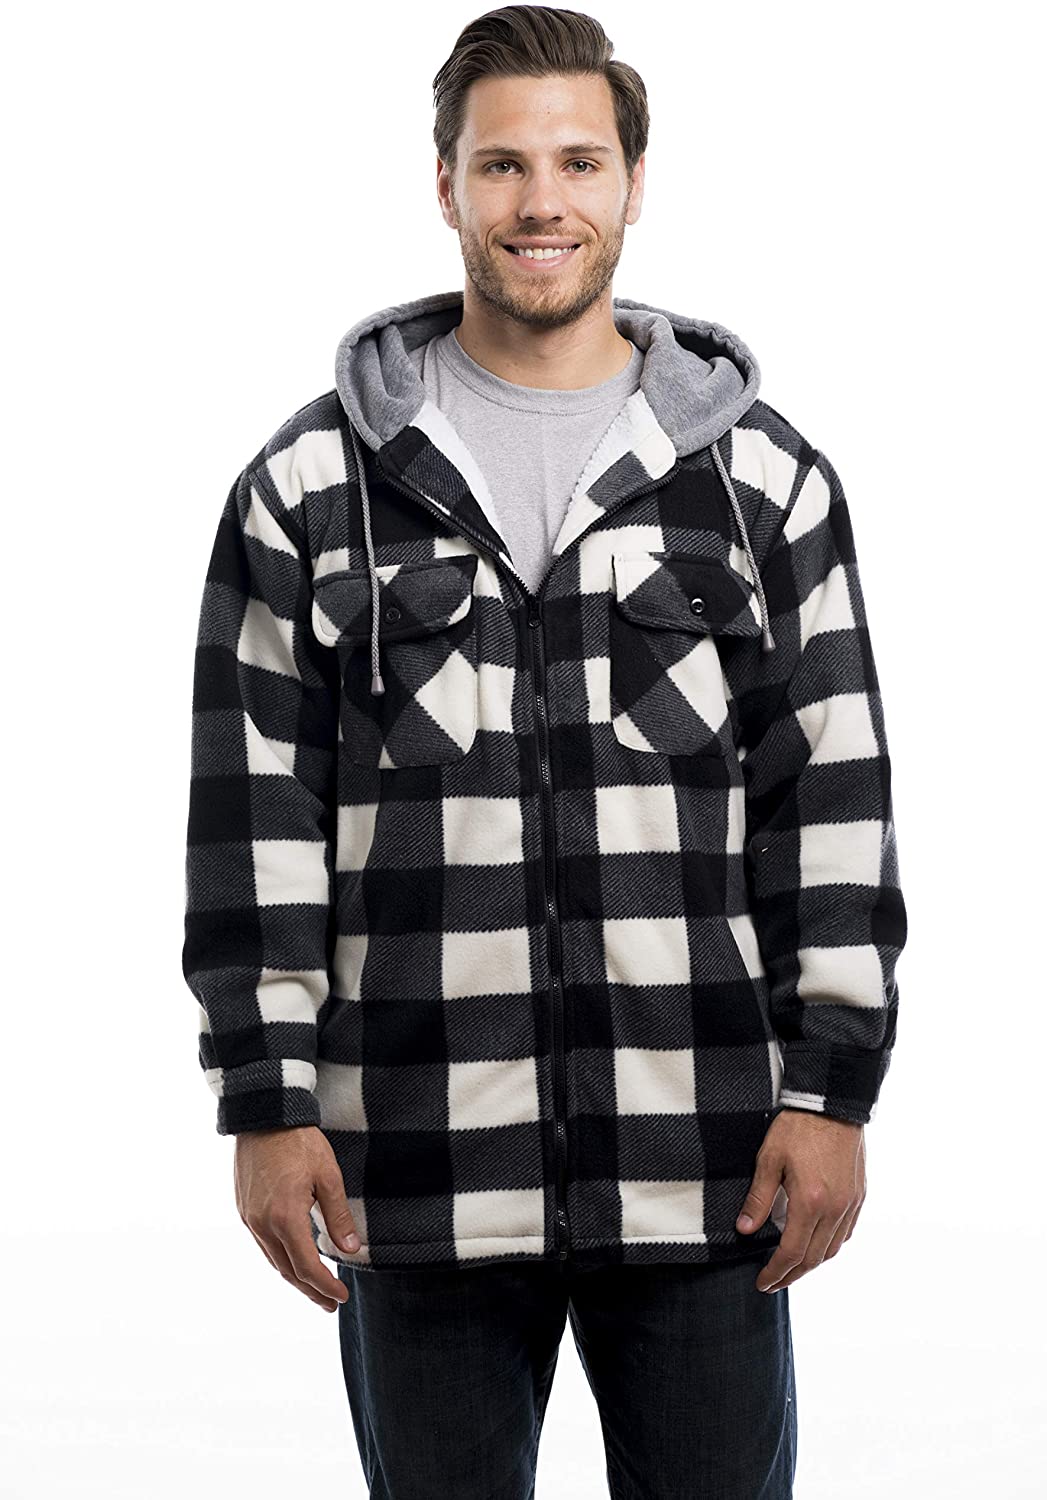 TrailCrest Men's Warm Sherpa Lined Hoodie Fleece Shirt Jacket